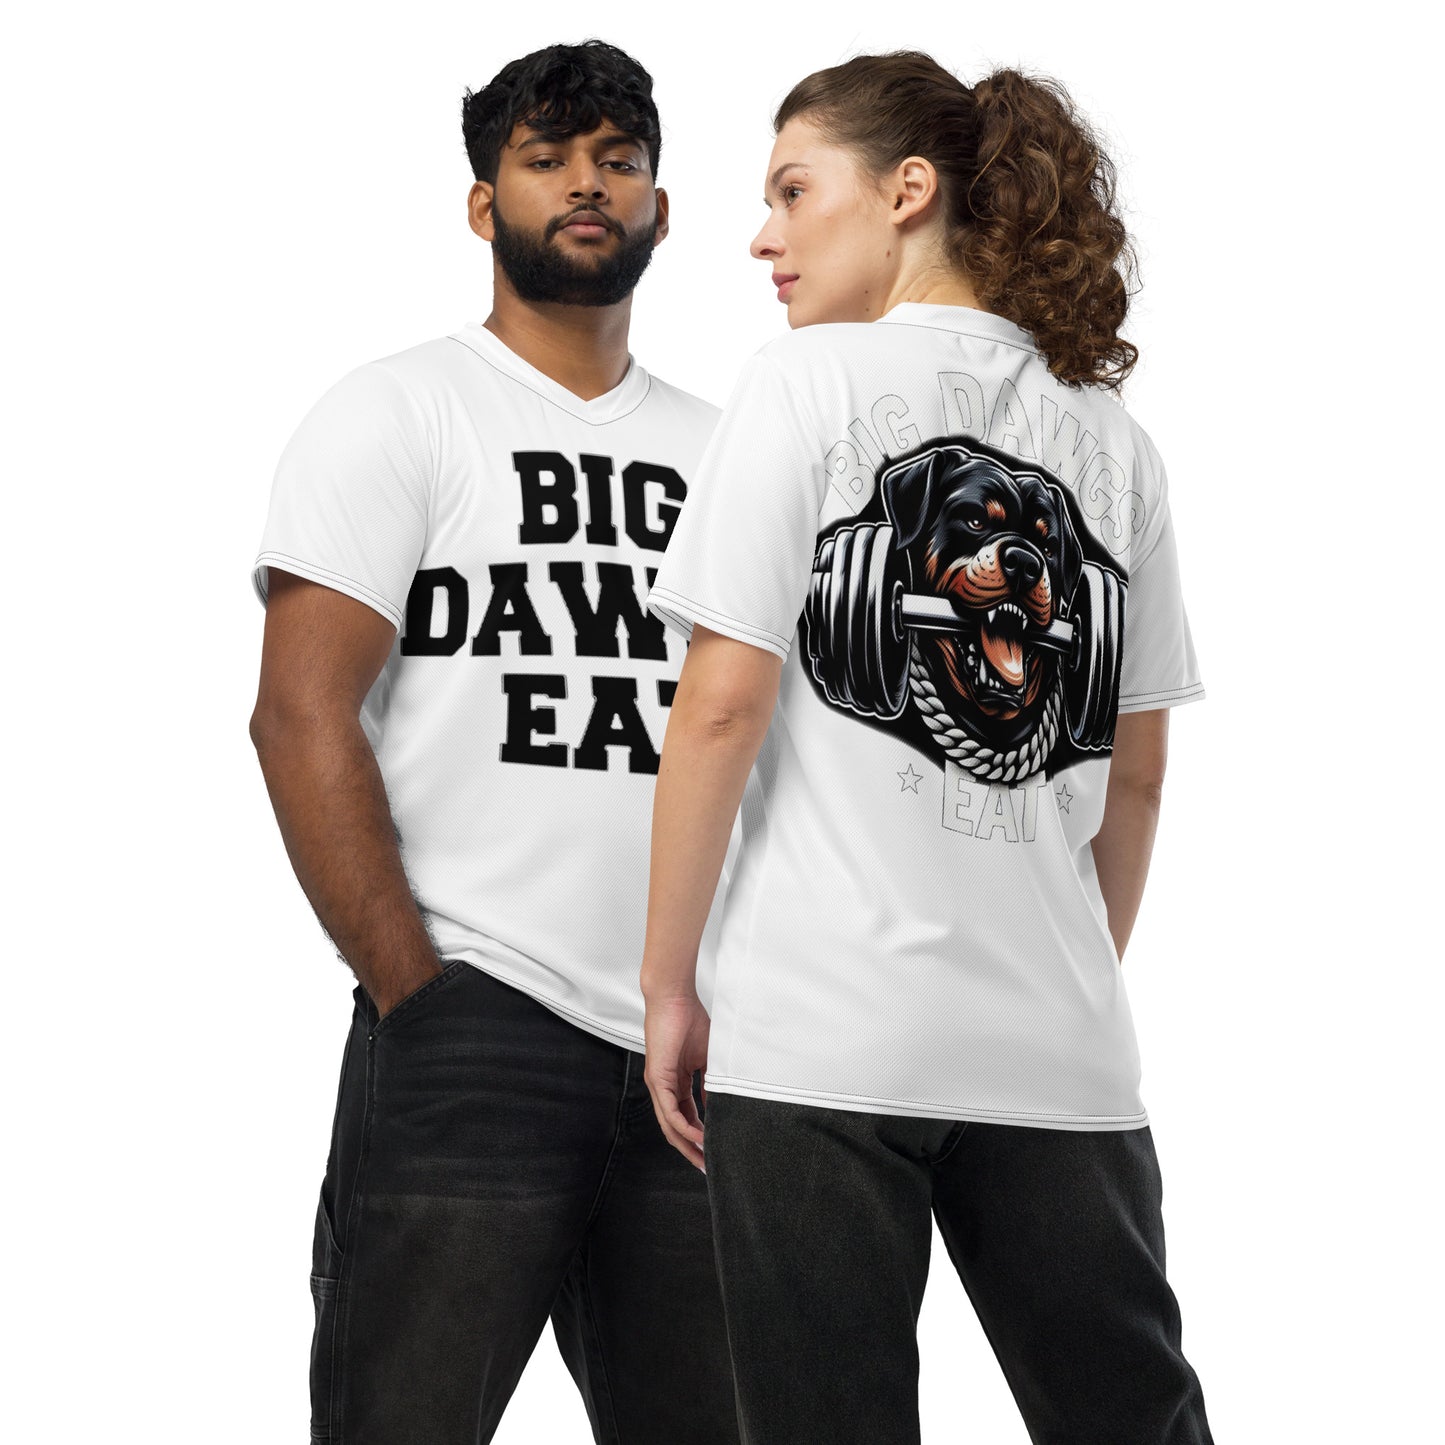 Unisex BIG DAWGS EAT sports jersey